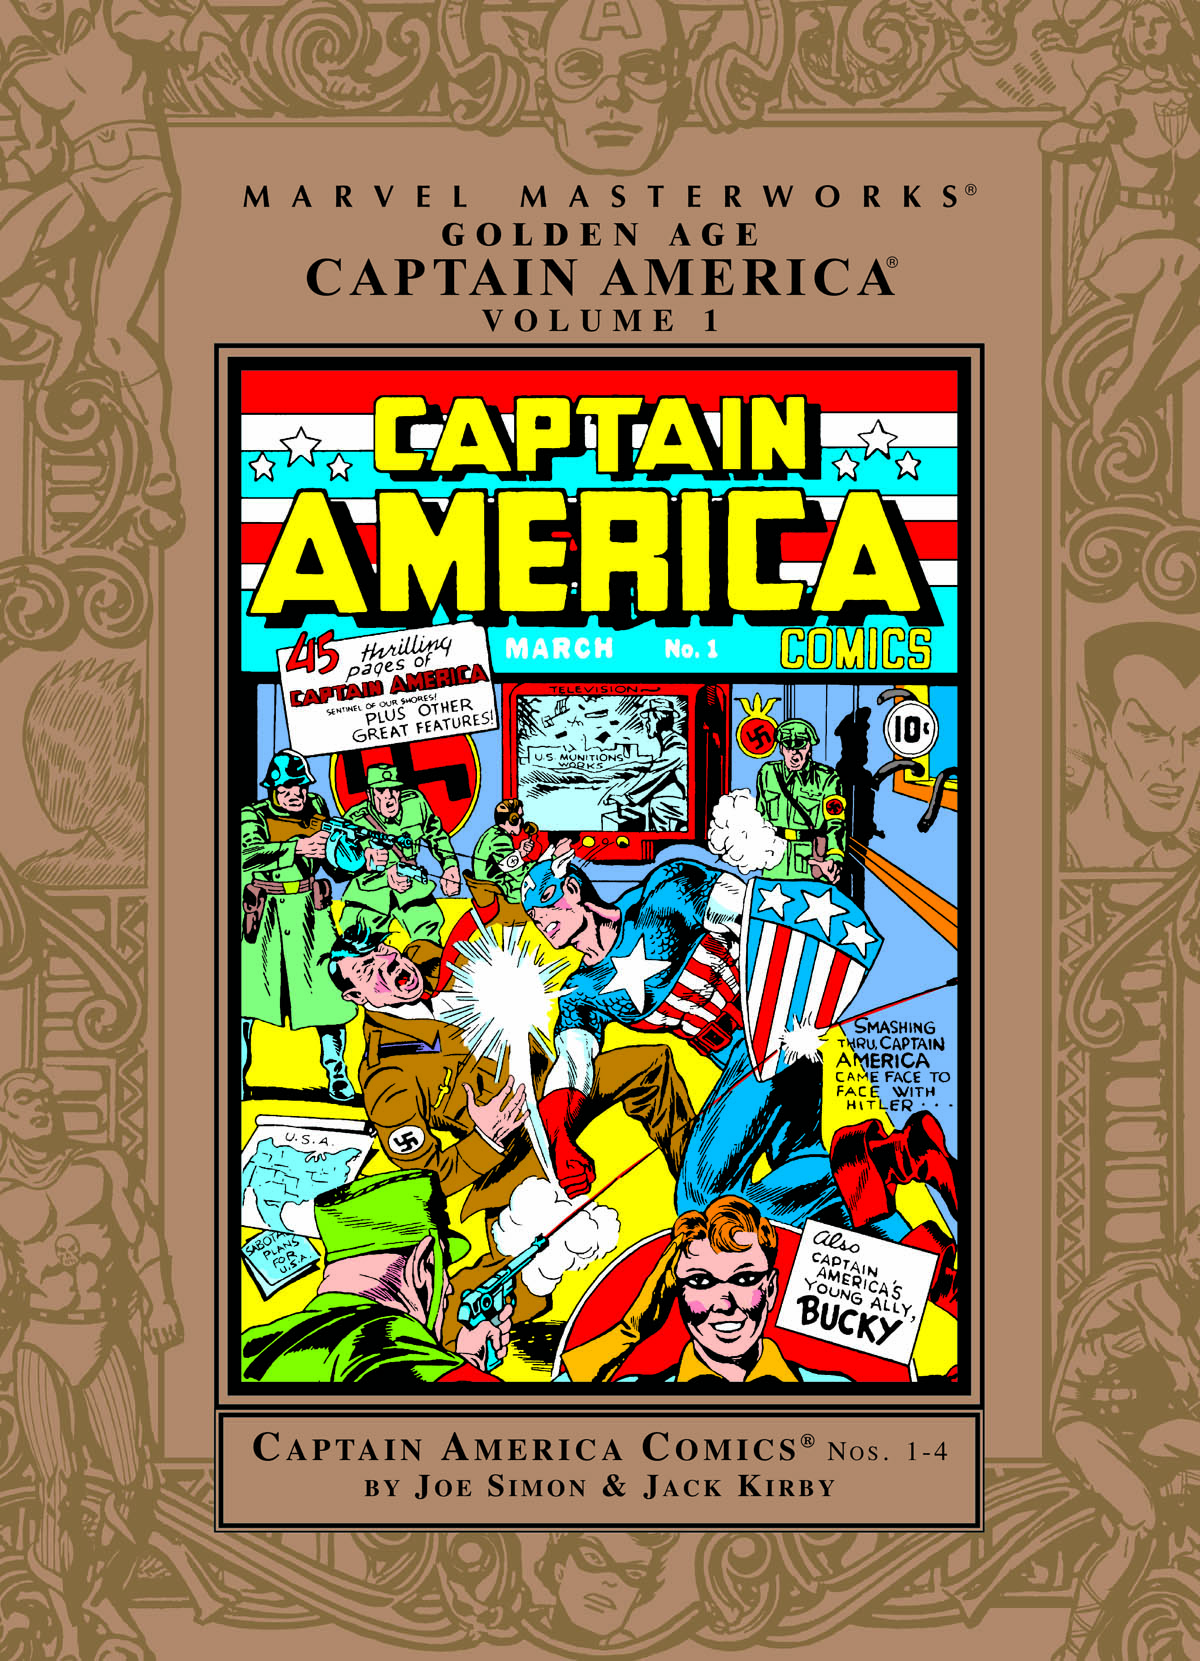 Marvel masterworks golden age captain america comics vol 1